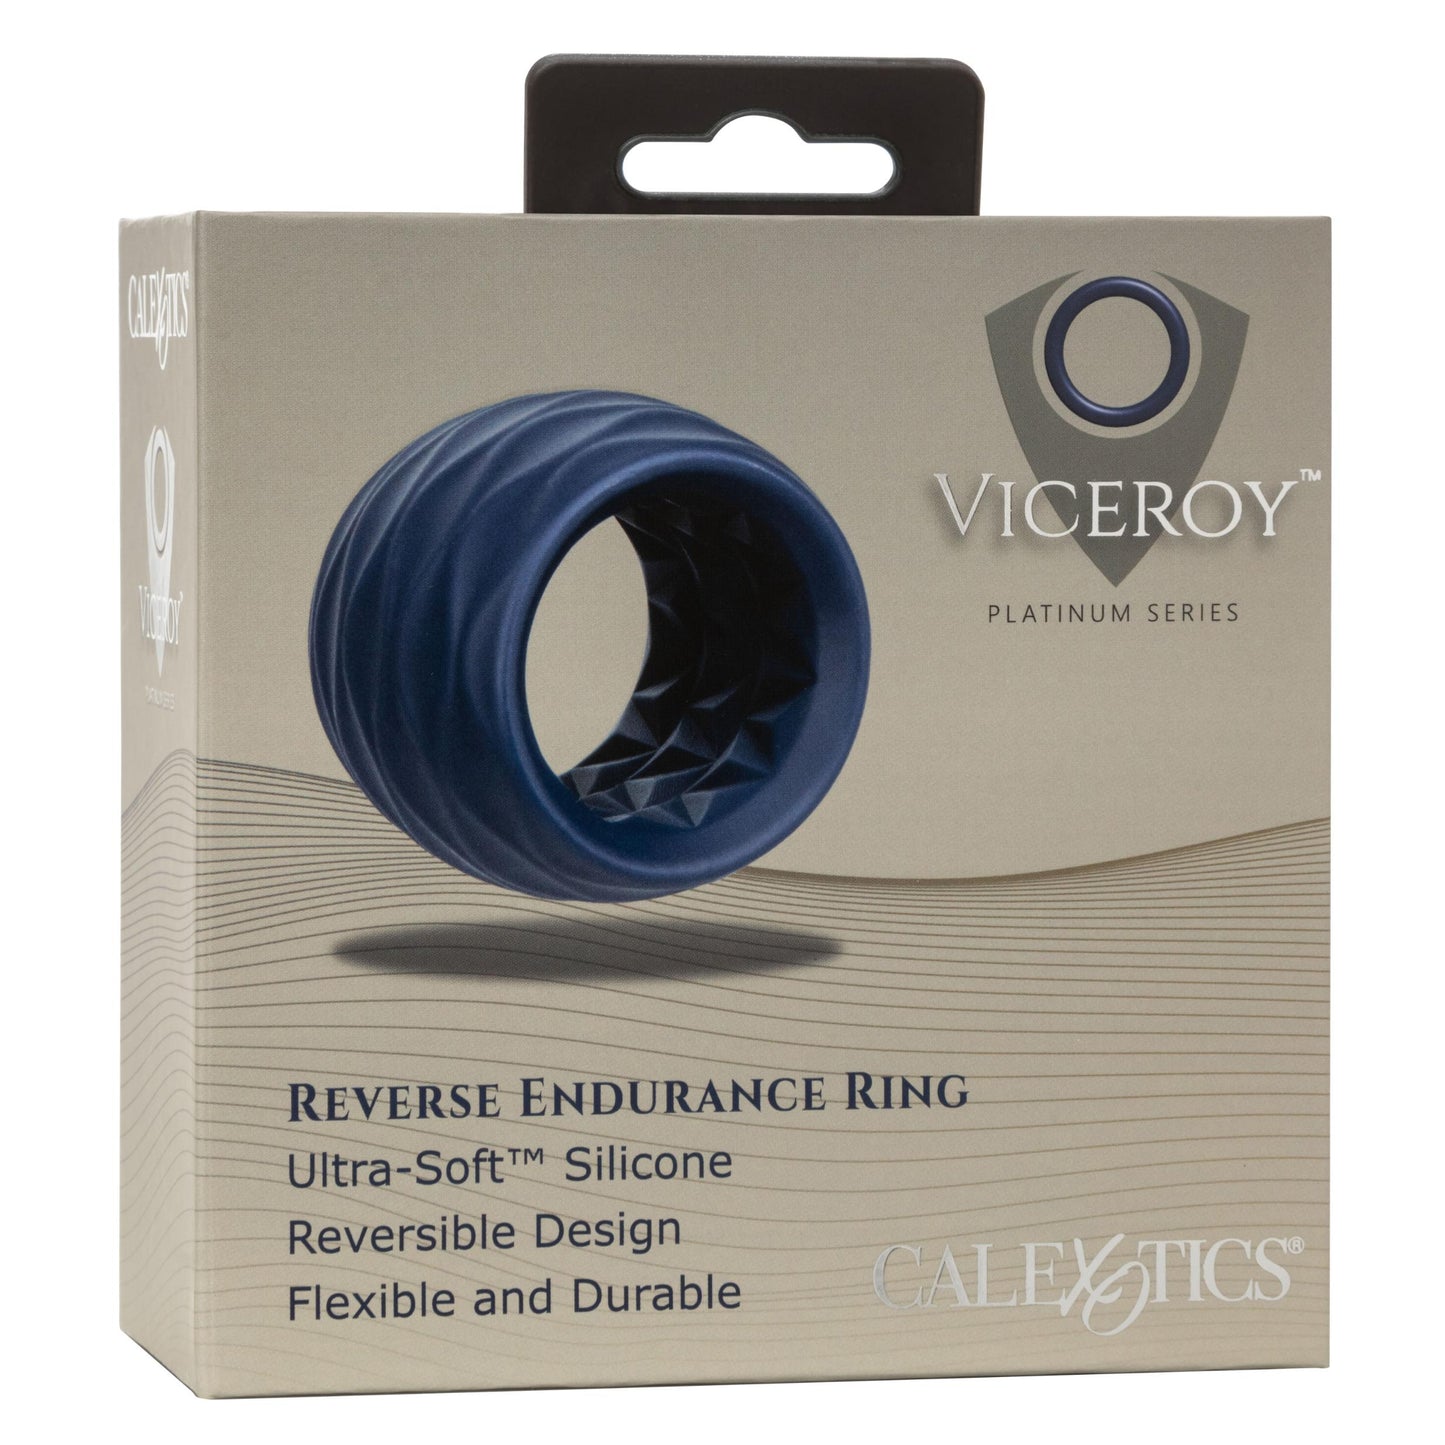 Viceroy Reverse Endurance Ring